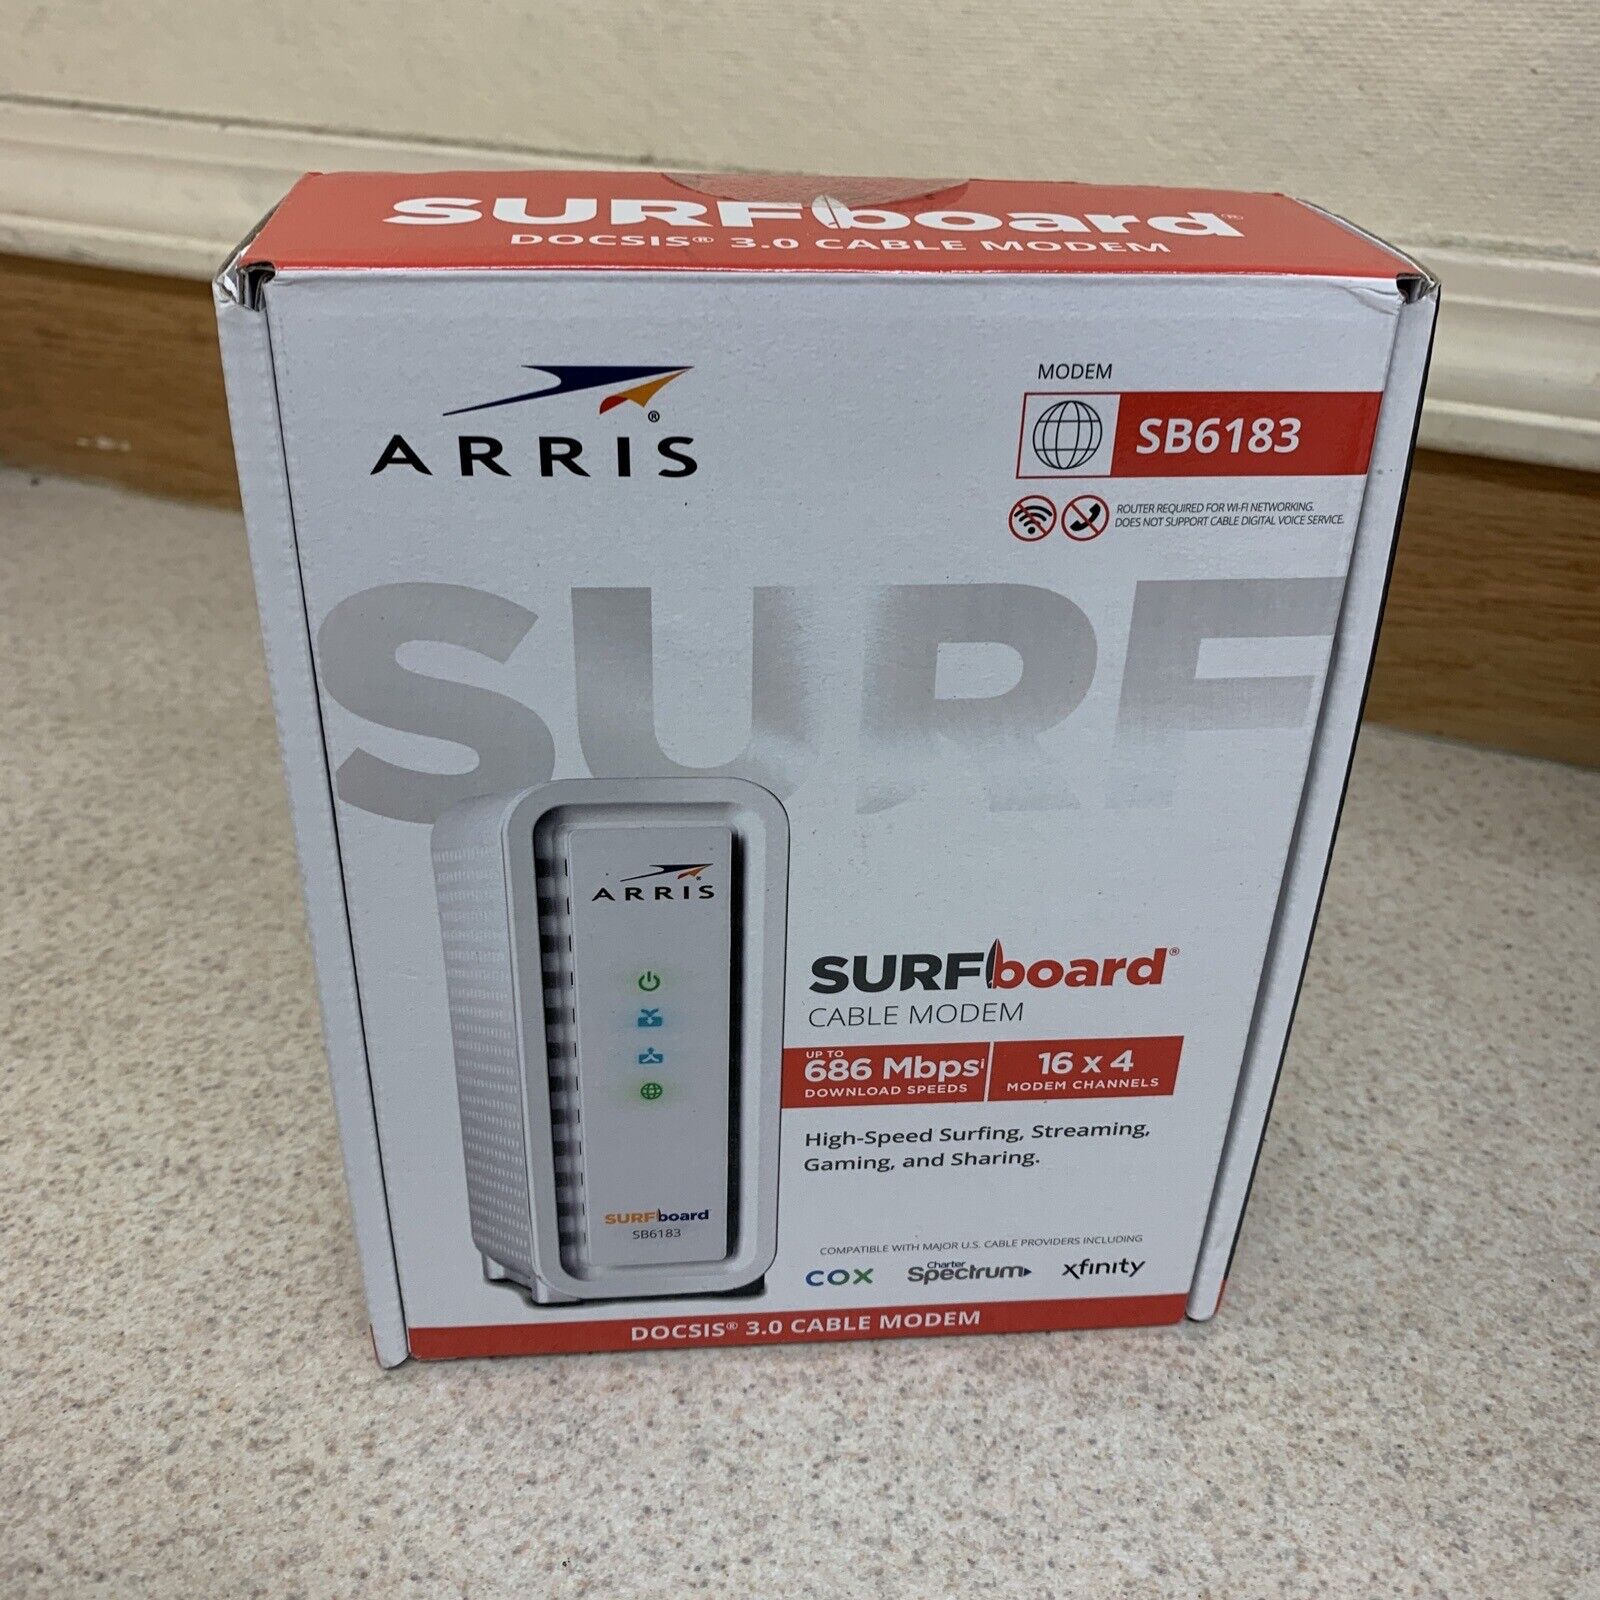 ARRIS SB6183 SURFBoard DOCSIS Speed 3.0 Cable Modem Xfinity Cox Spectrum - White